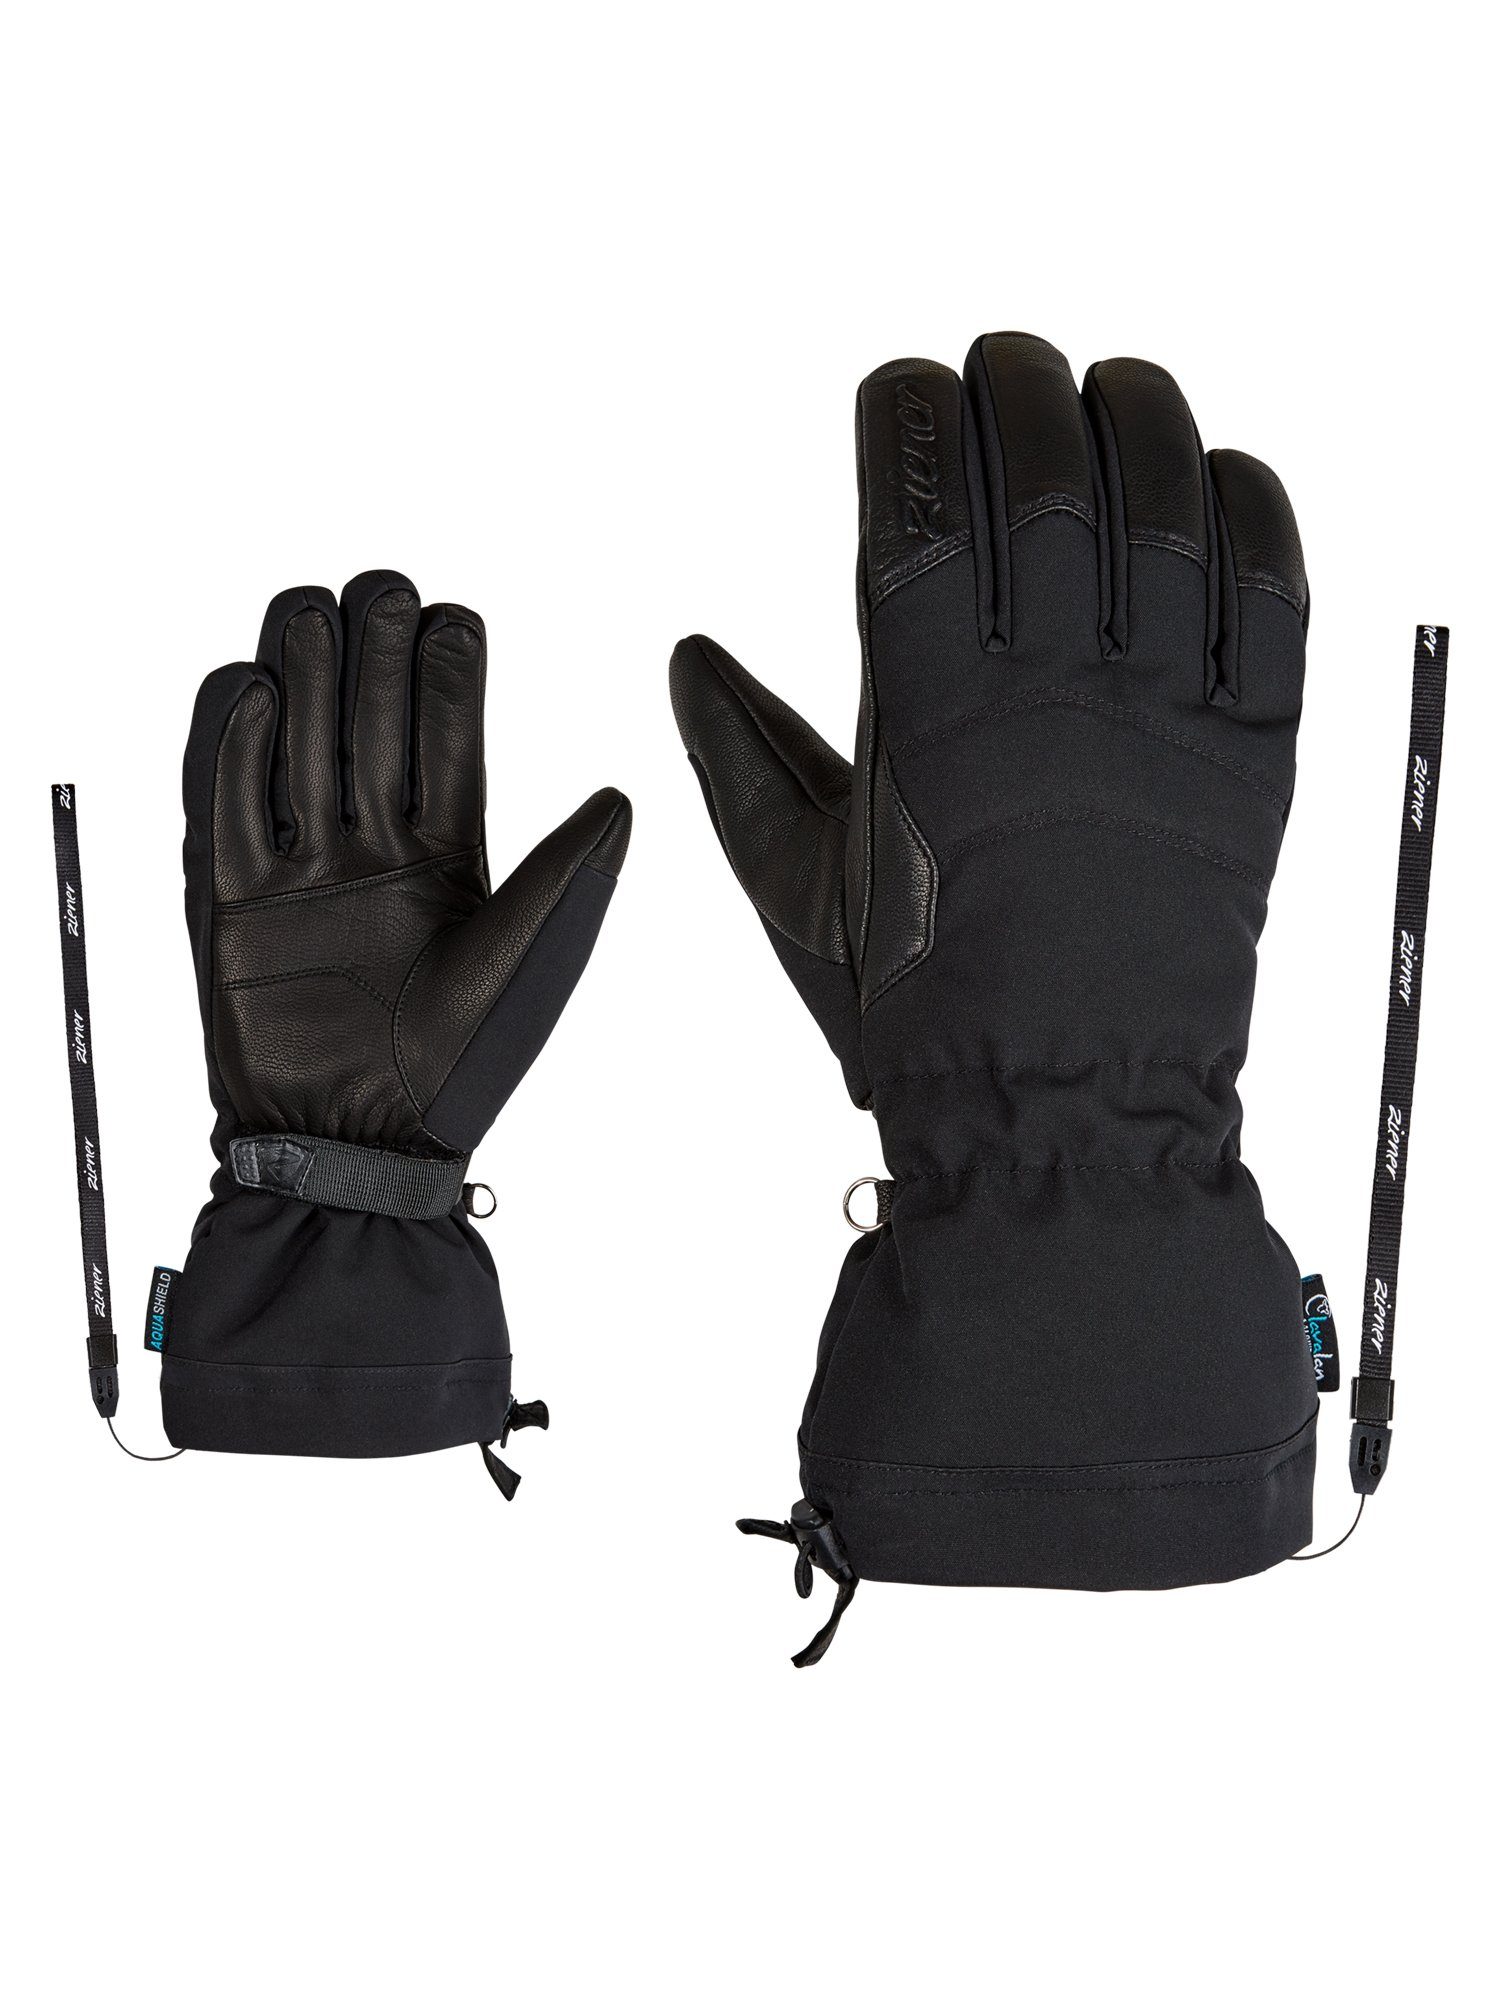 Ziener Skihandschuhe KILATA AS(R) AW lady glove 12 black